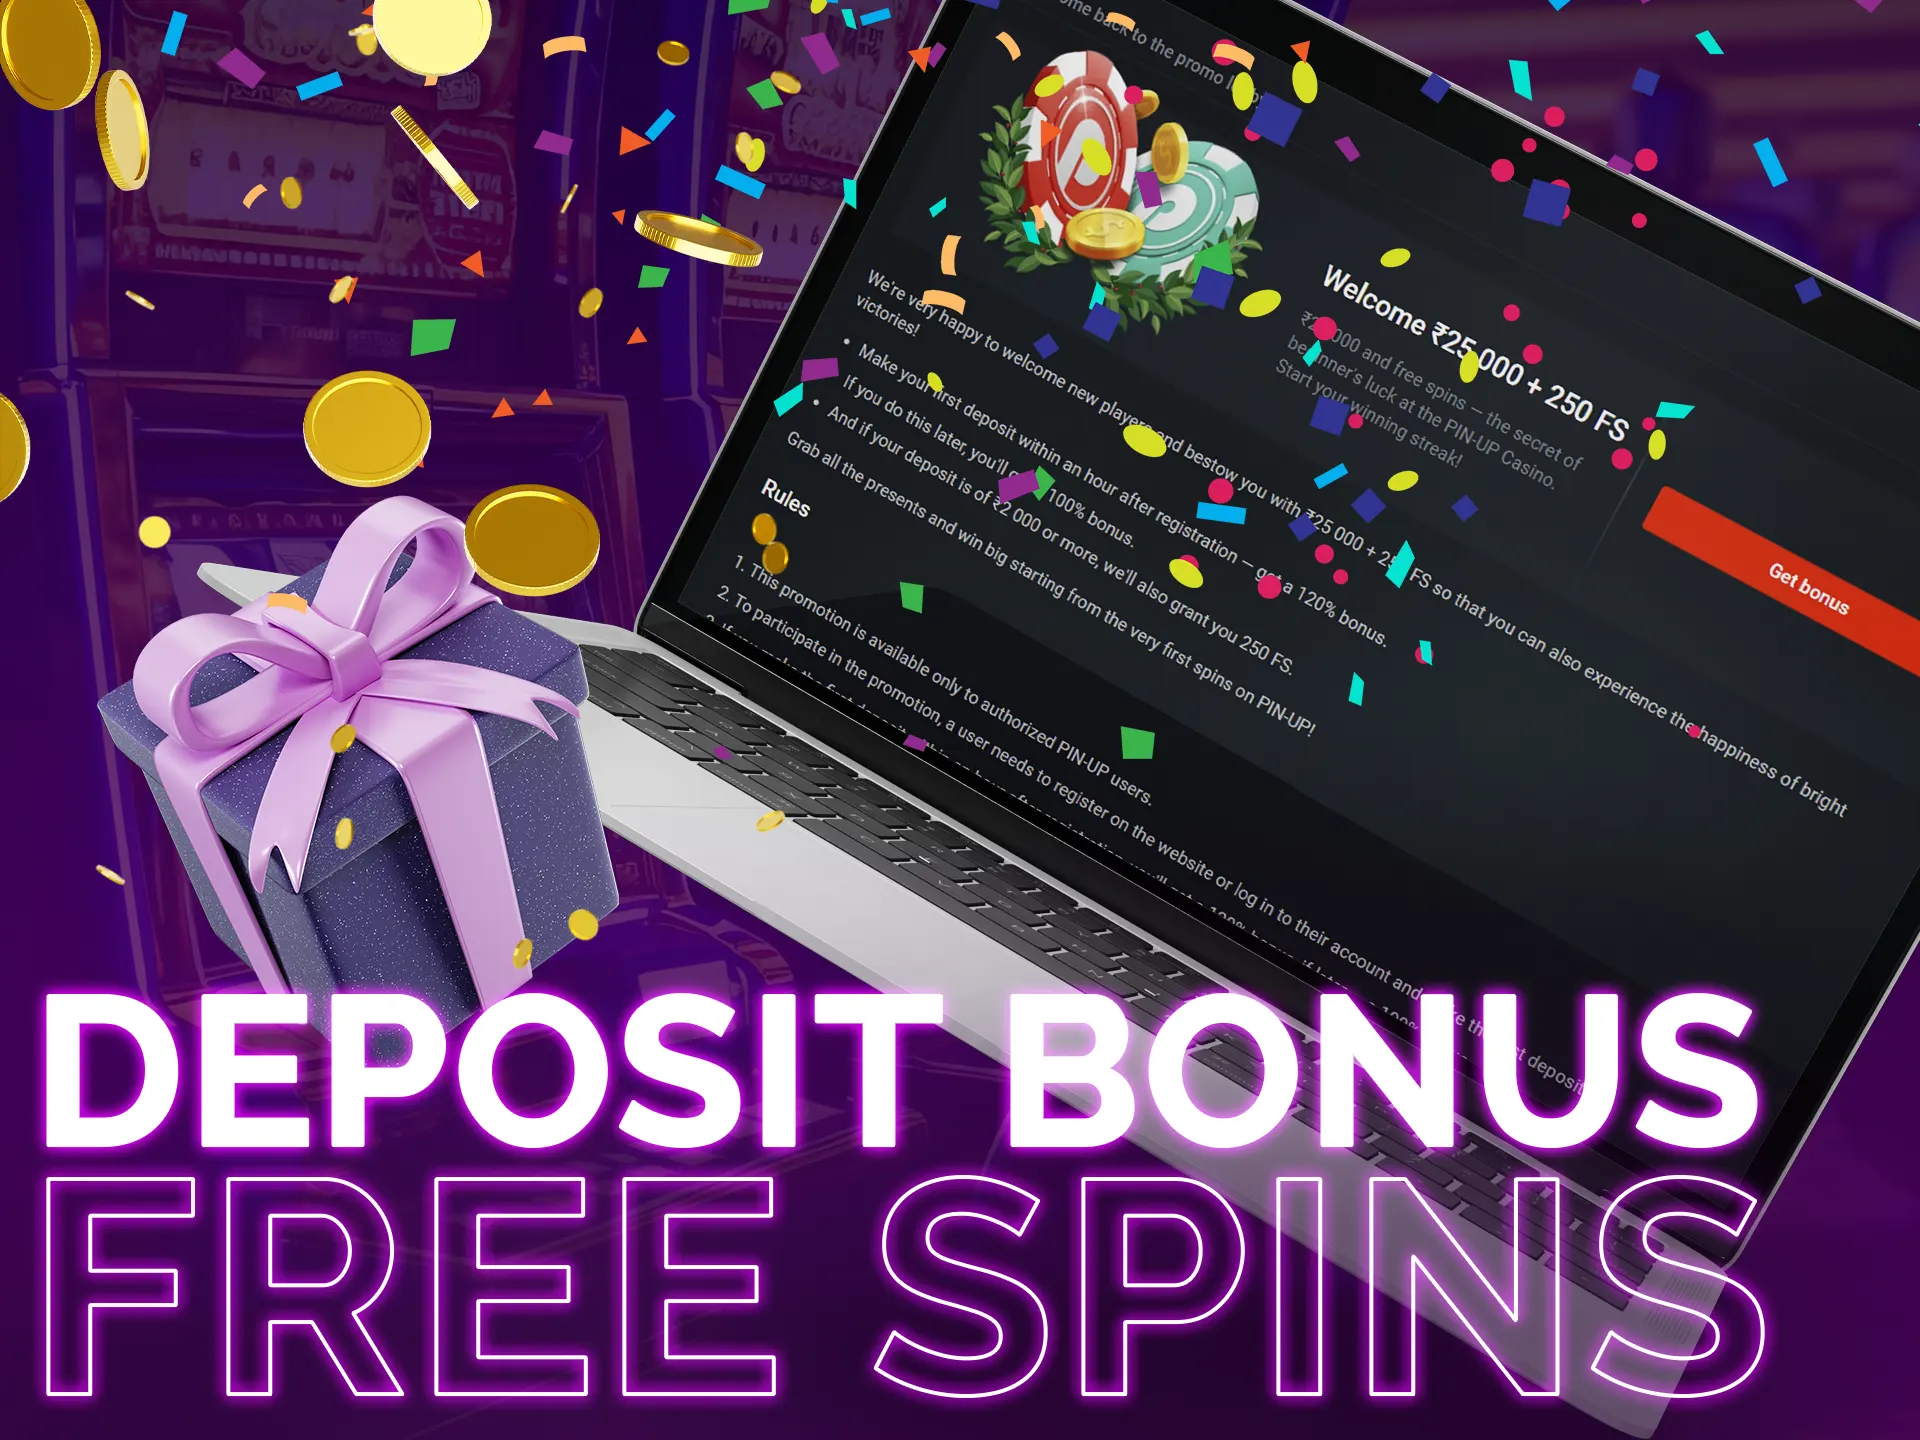 Get free spins with deposit bonus.